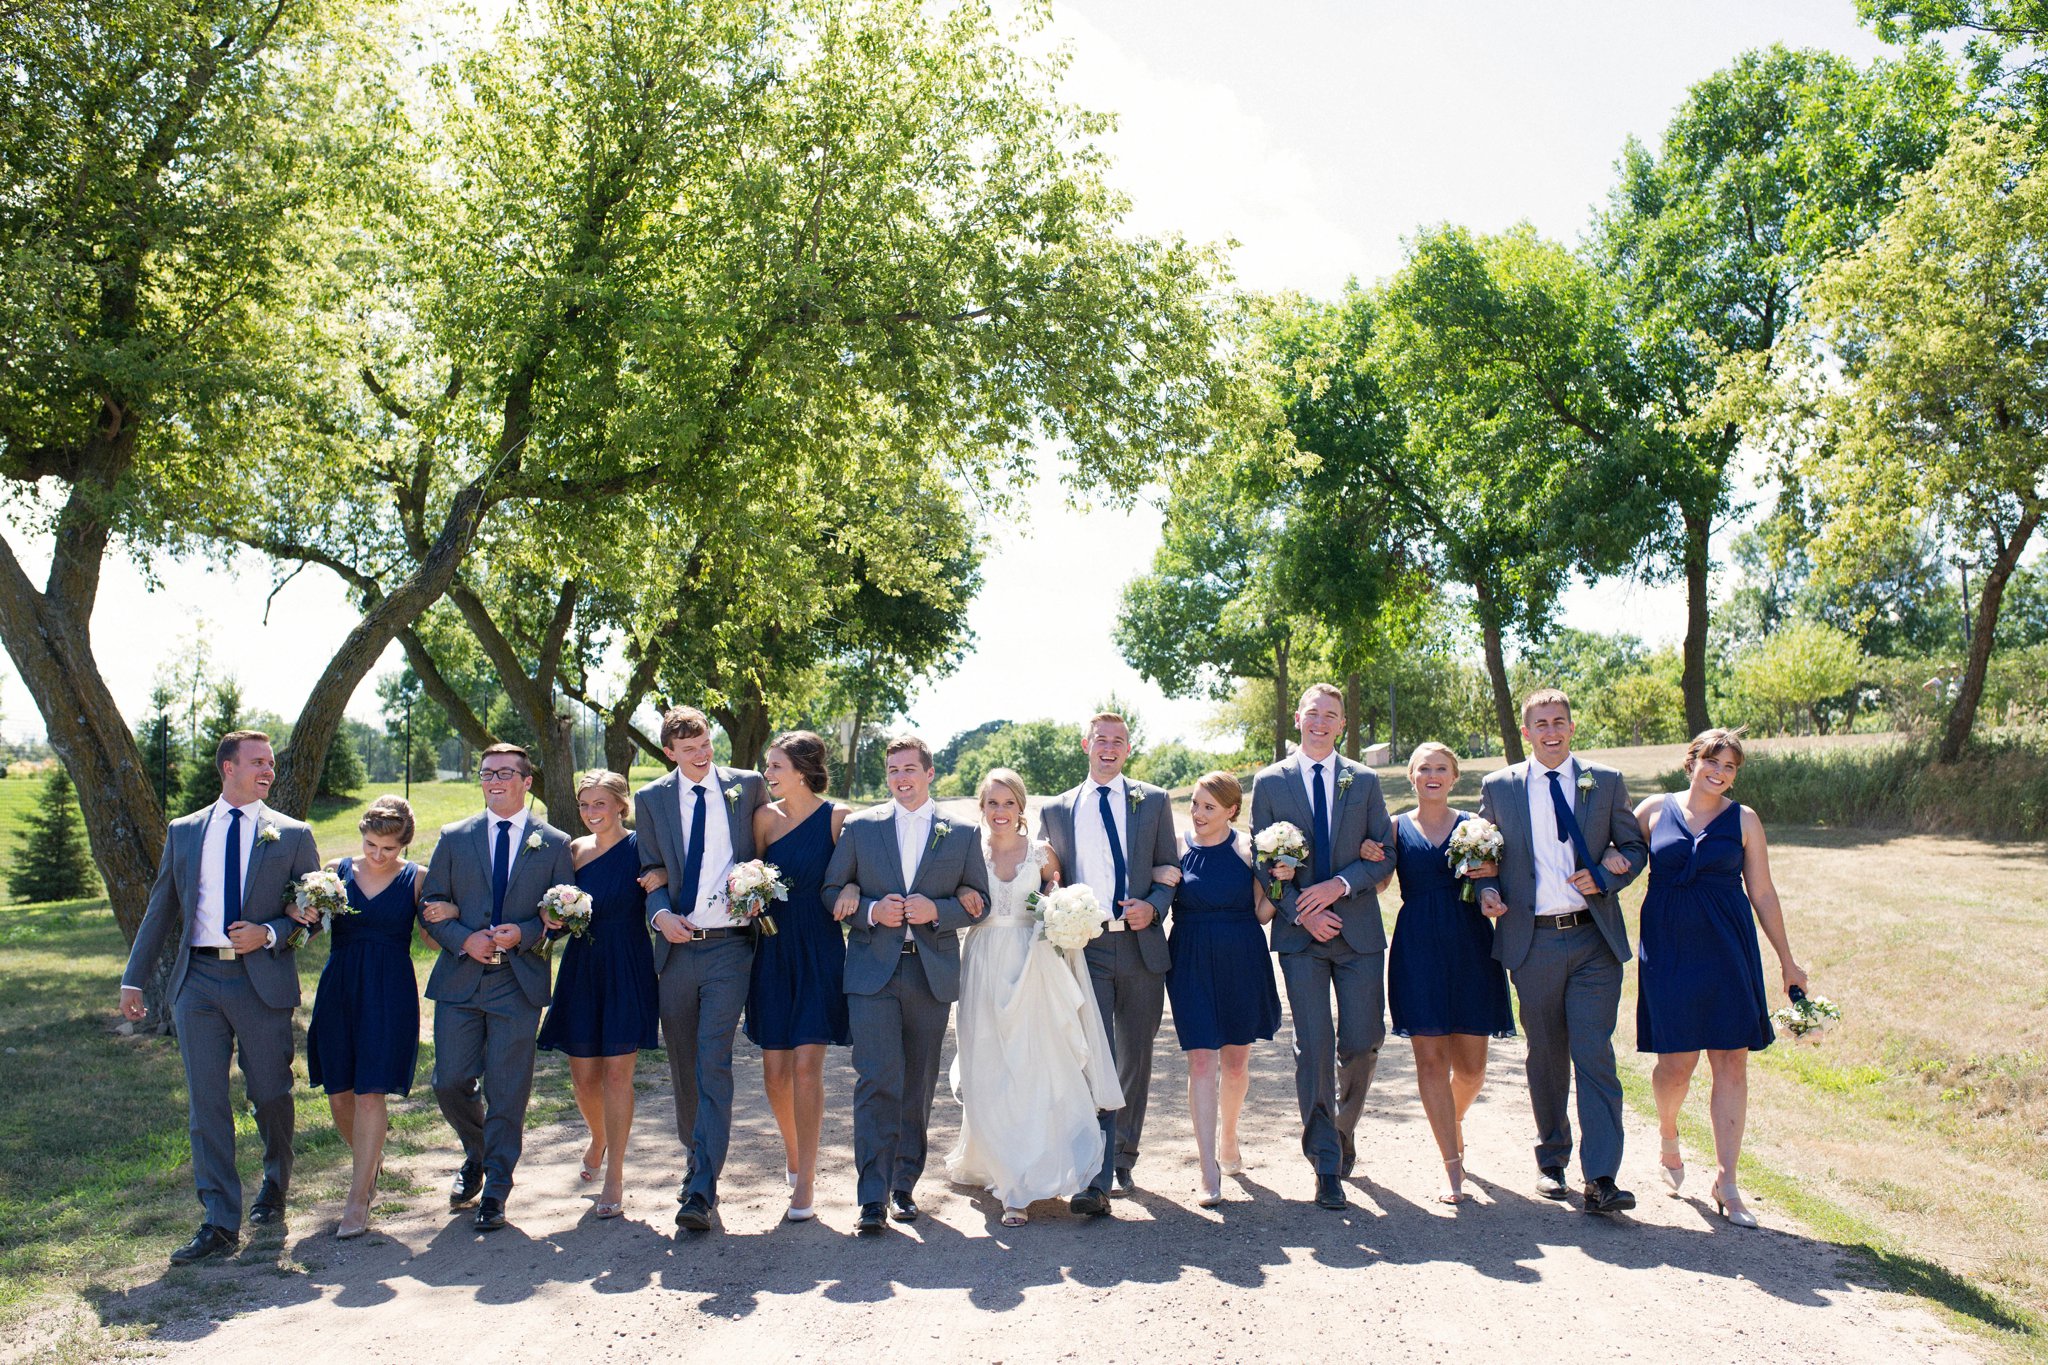 Sioux Falls Wedding Photos | Destination Photographer | Felicia The Photographer | Mary Jo Wegner Arboretum | Bridal Party | Navy one shoulder dresses | Walking | Candid